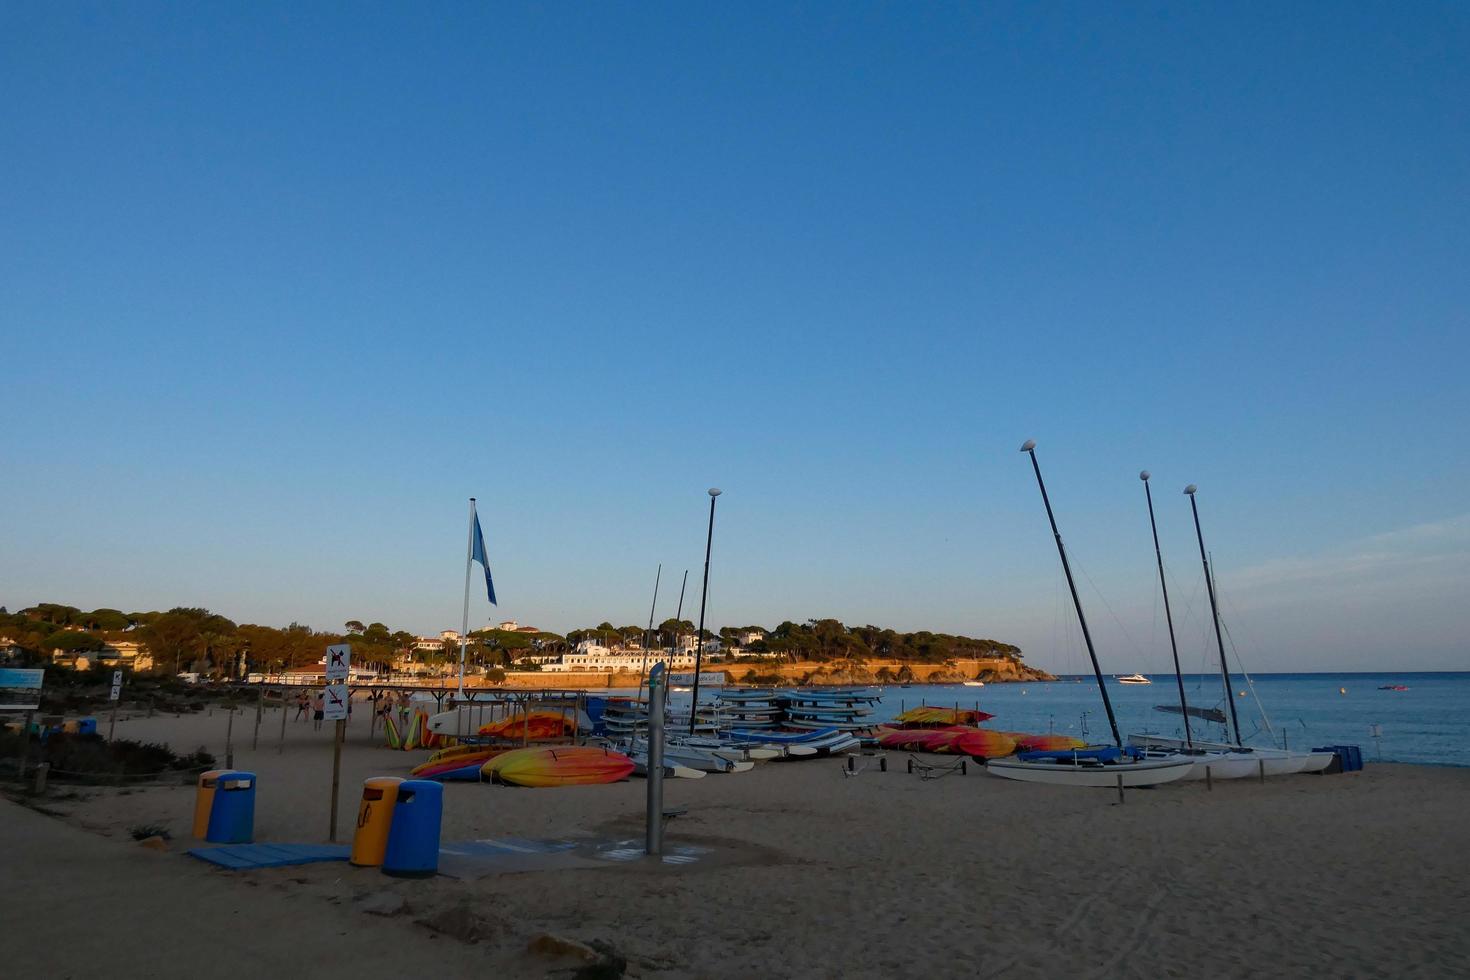 Costa brava Sant Pol beach in S'agaro photo